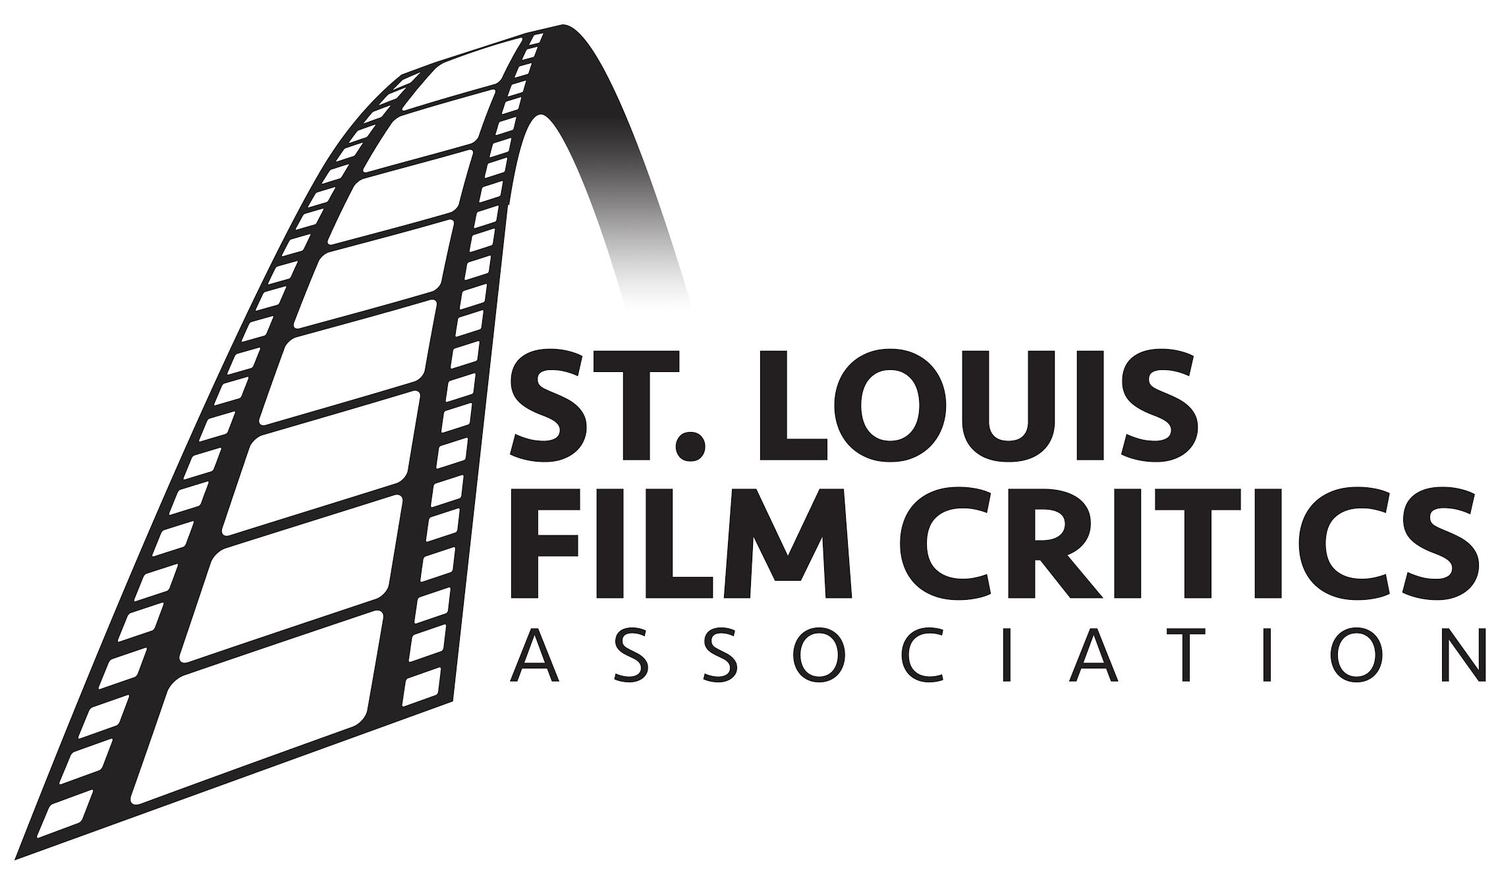 St. Louis Film Critics Association